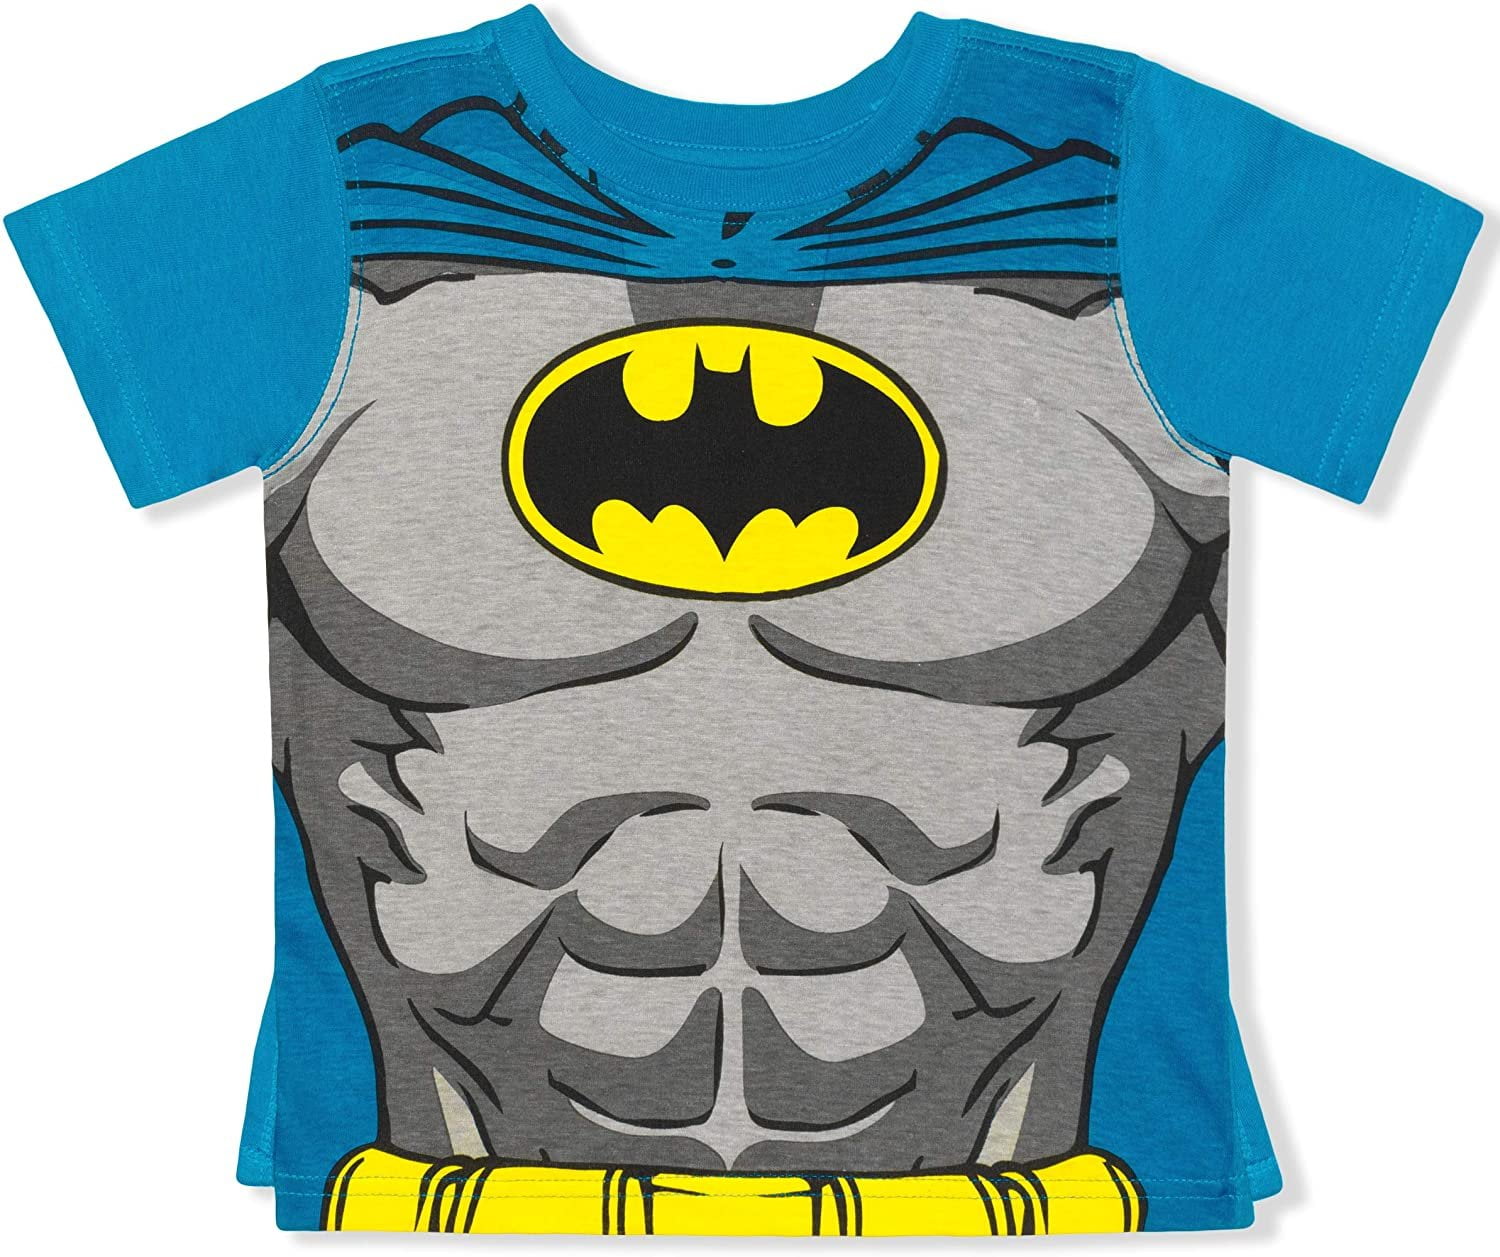 Shoes & Jewelry Warner Bros Justice League Batman Boys Raglan T-Shirt & Shorts Set Clothing 